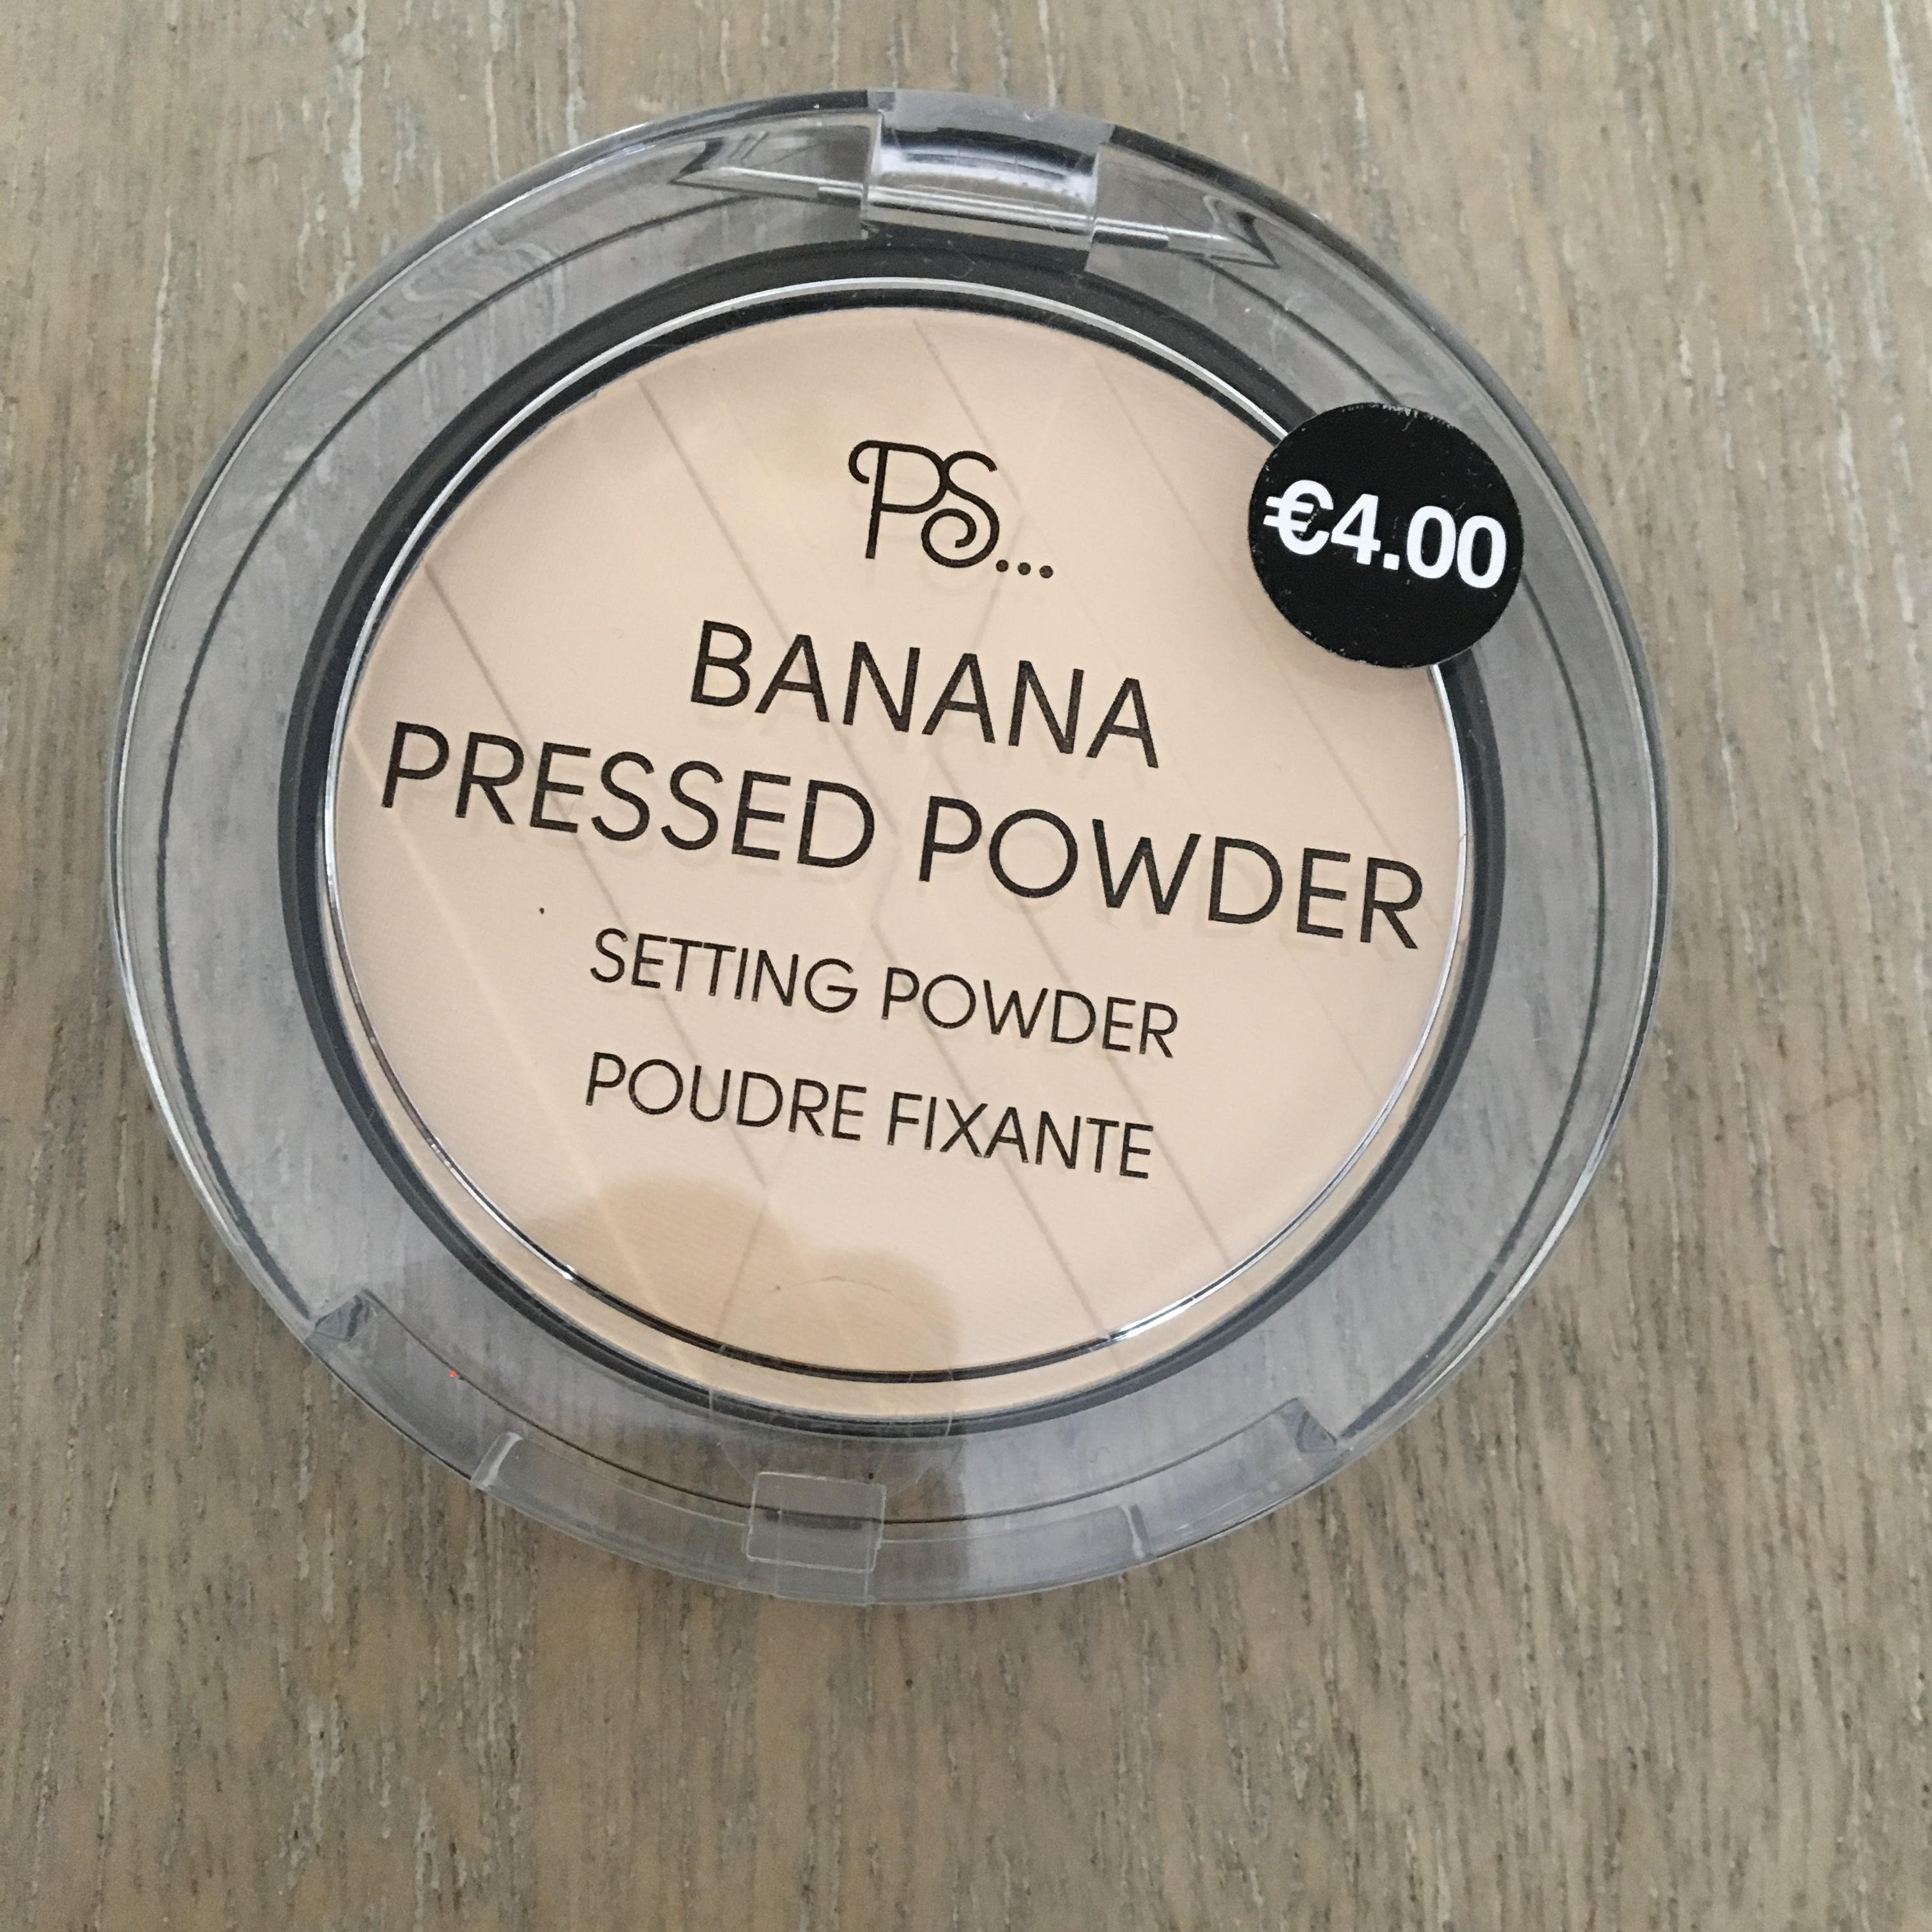 makeup picks from Penneys banana powder